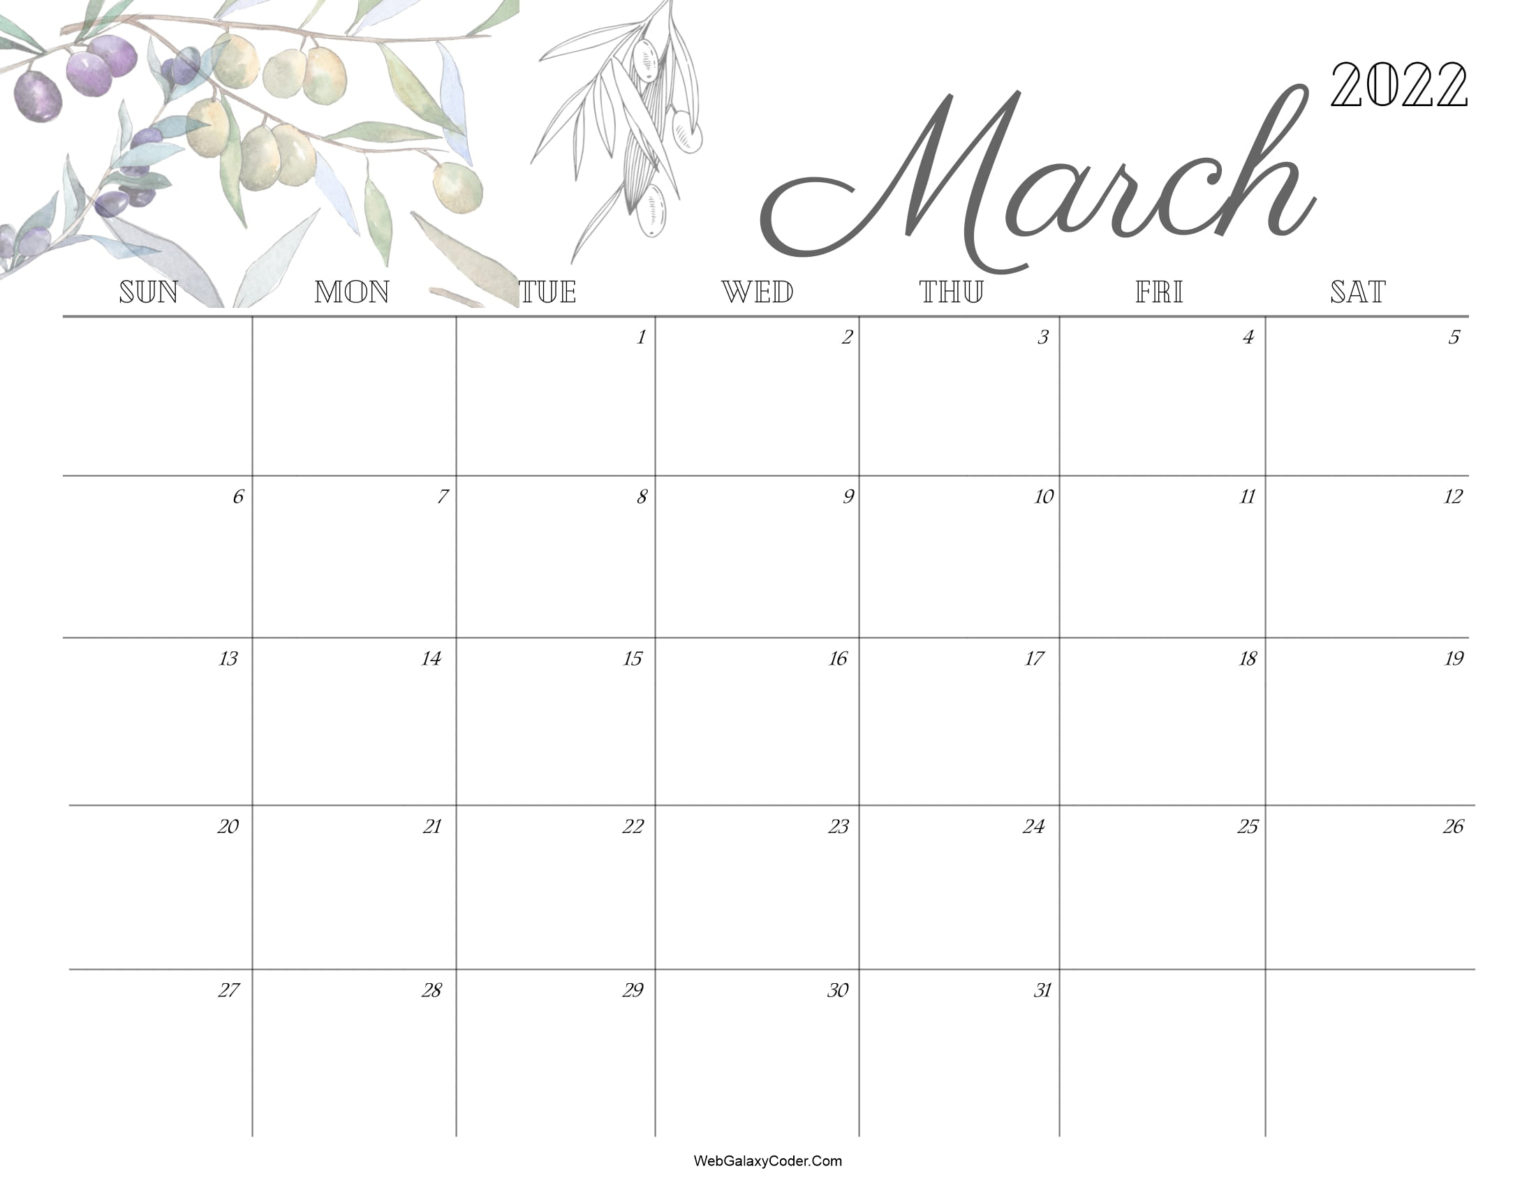 Get March 2022 Calendar In Kannada